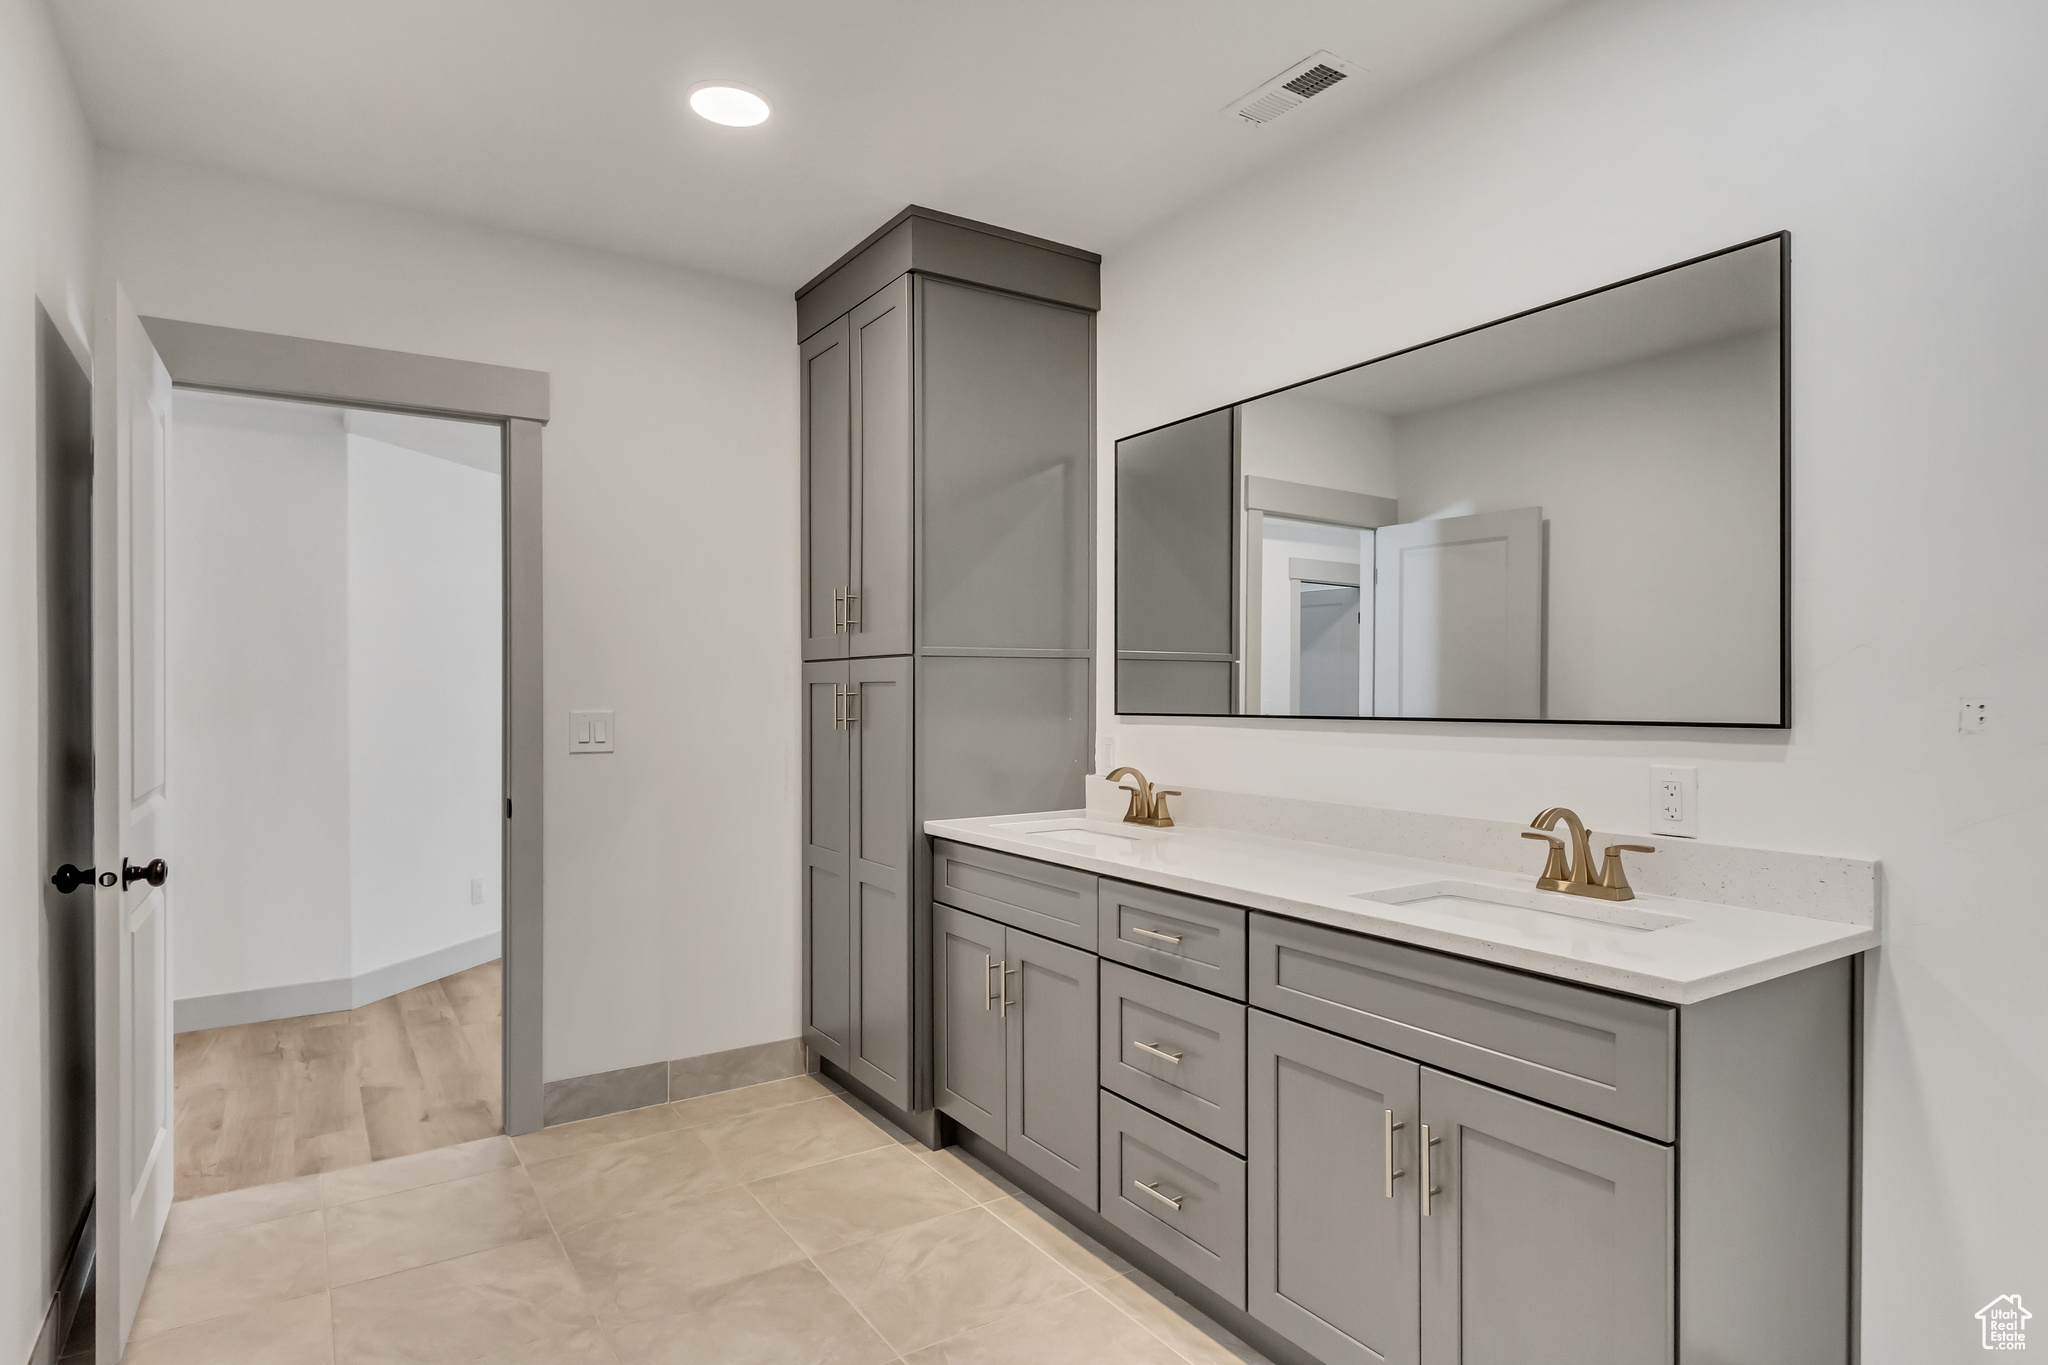 Bathroom with hardwood / wood-style floors, oversized vanity, and dual sinks